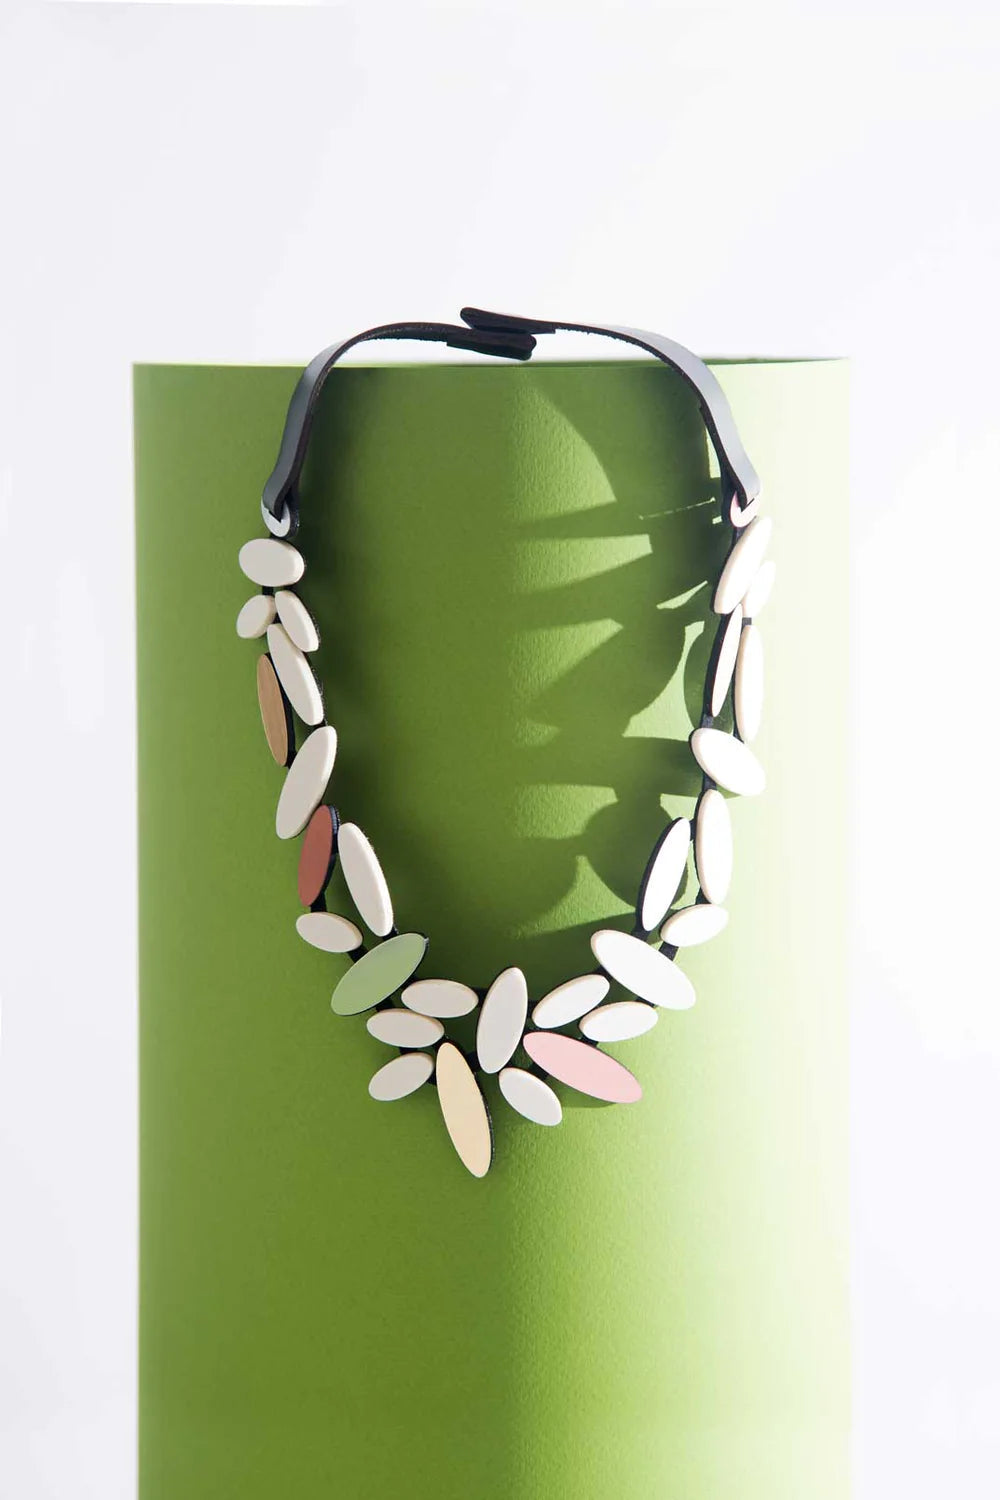 Petals Necklace - The Nancy Smillie Shop - Art, Jewellery & Designer Gifts Glasgow